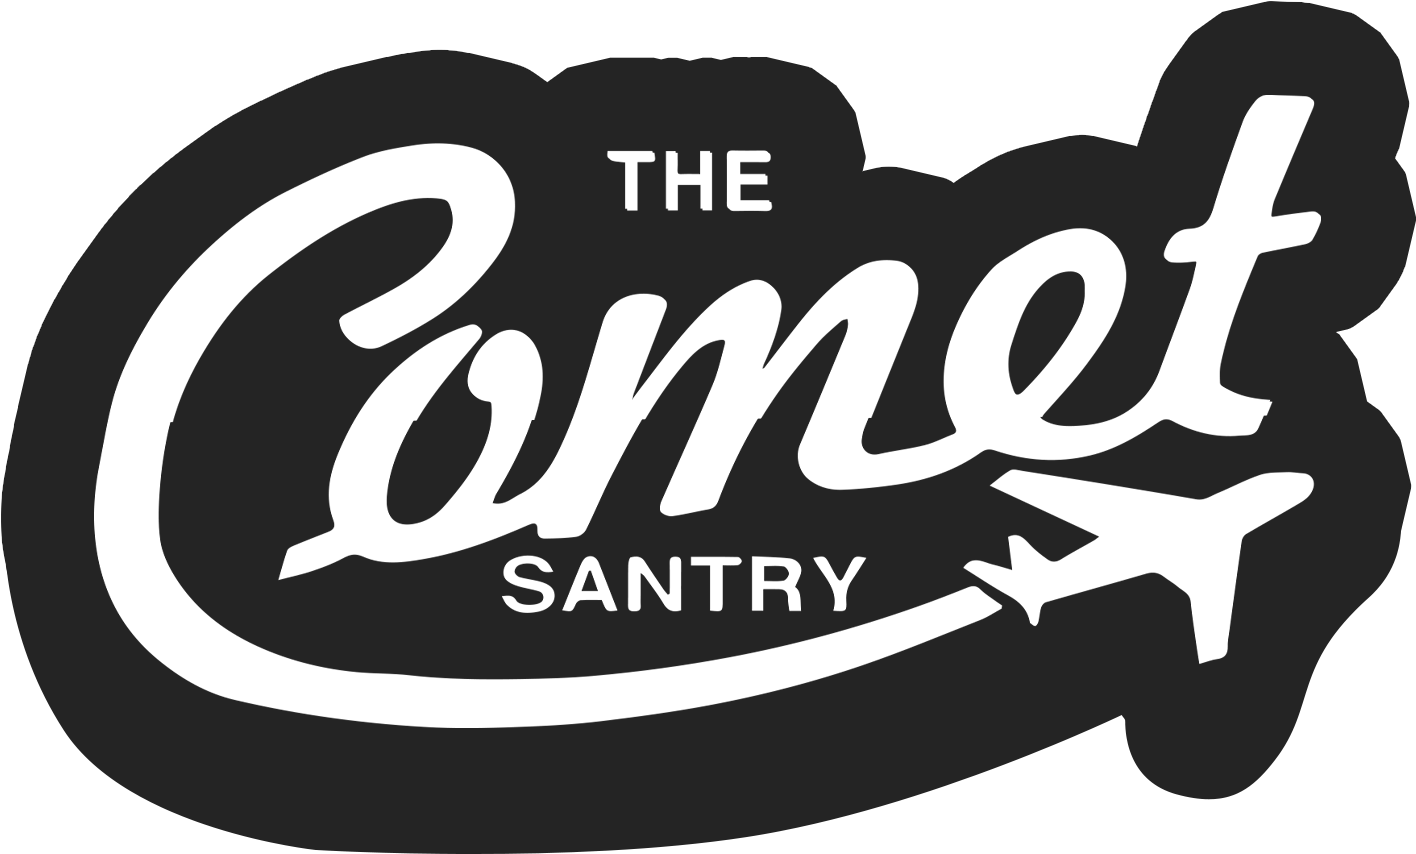 The Comet Pizza Santry